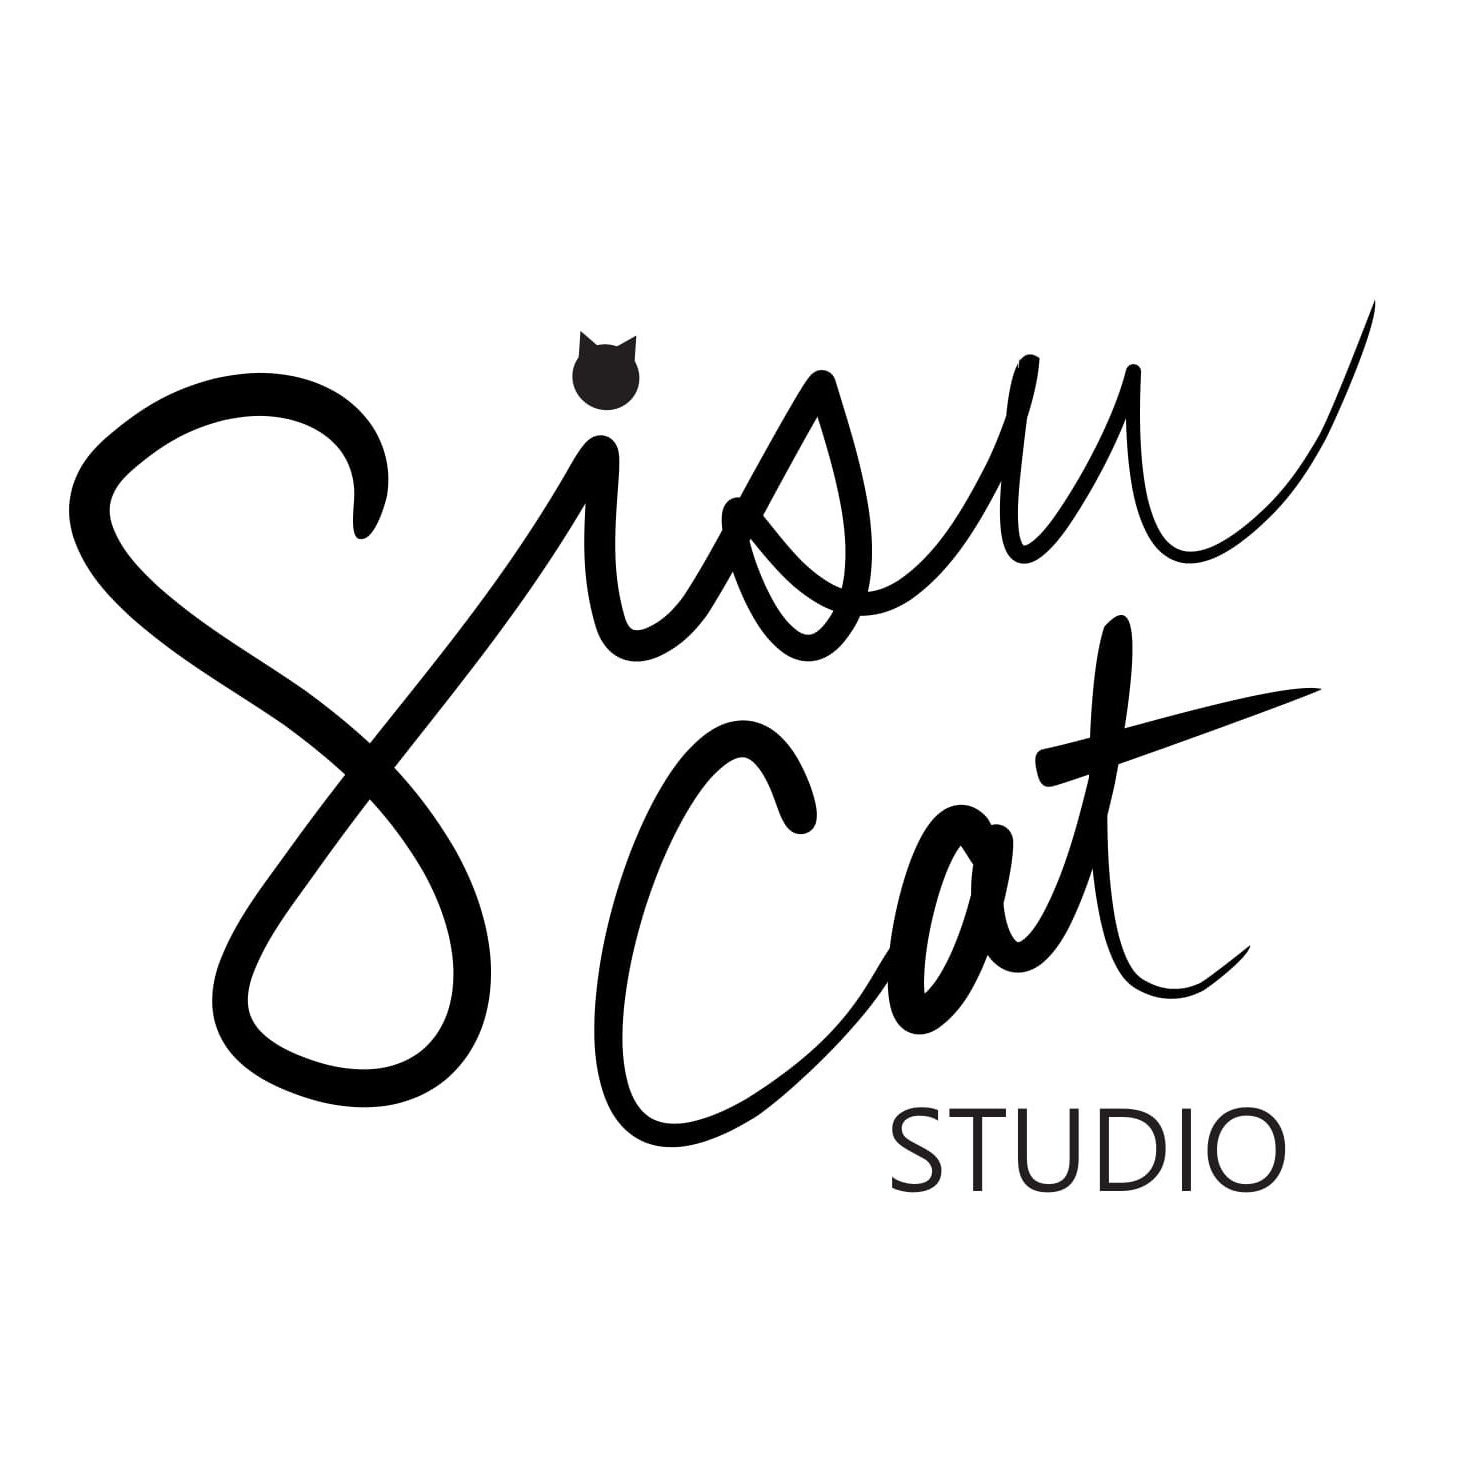 Resume Abstract Intuitive Art Sisu Cat Studio